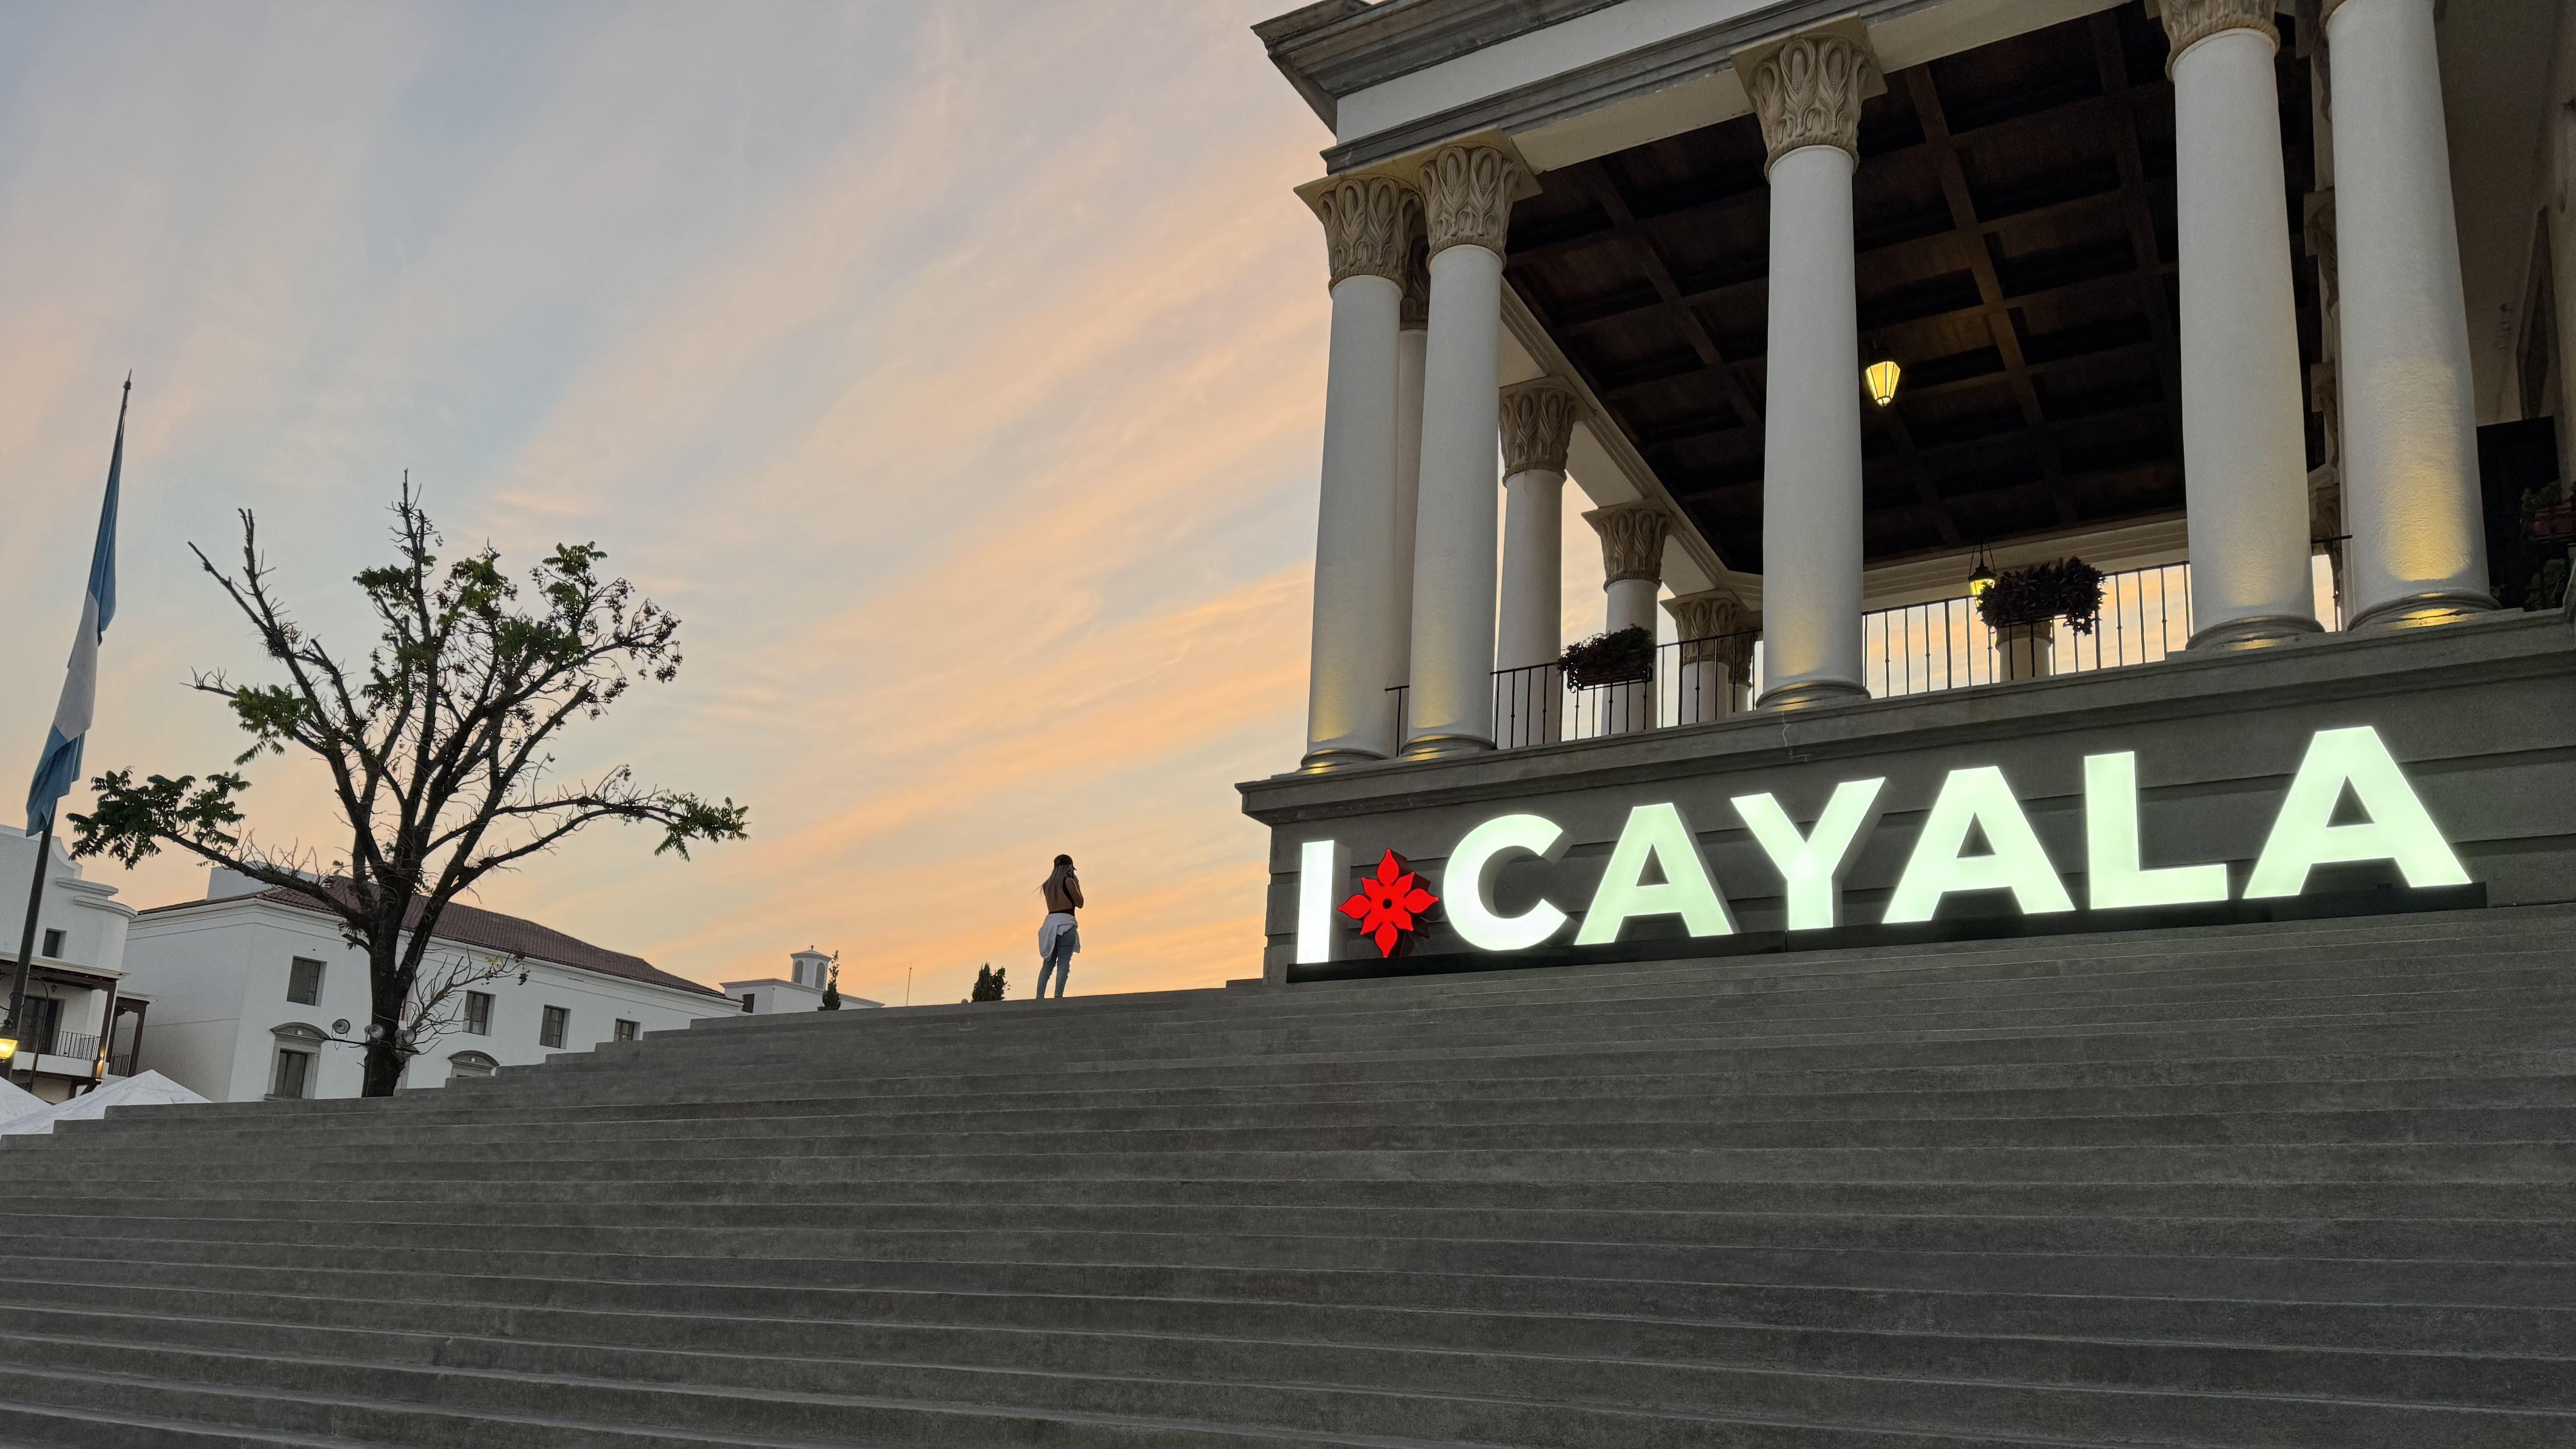 For critics, Cayalá deepens inequalities. 